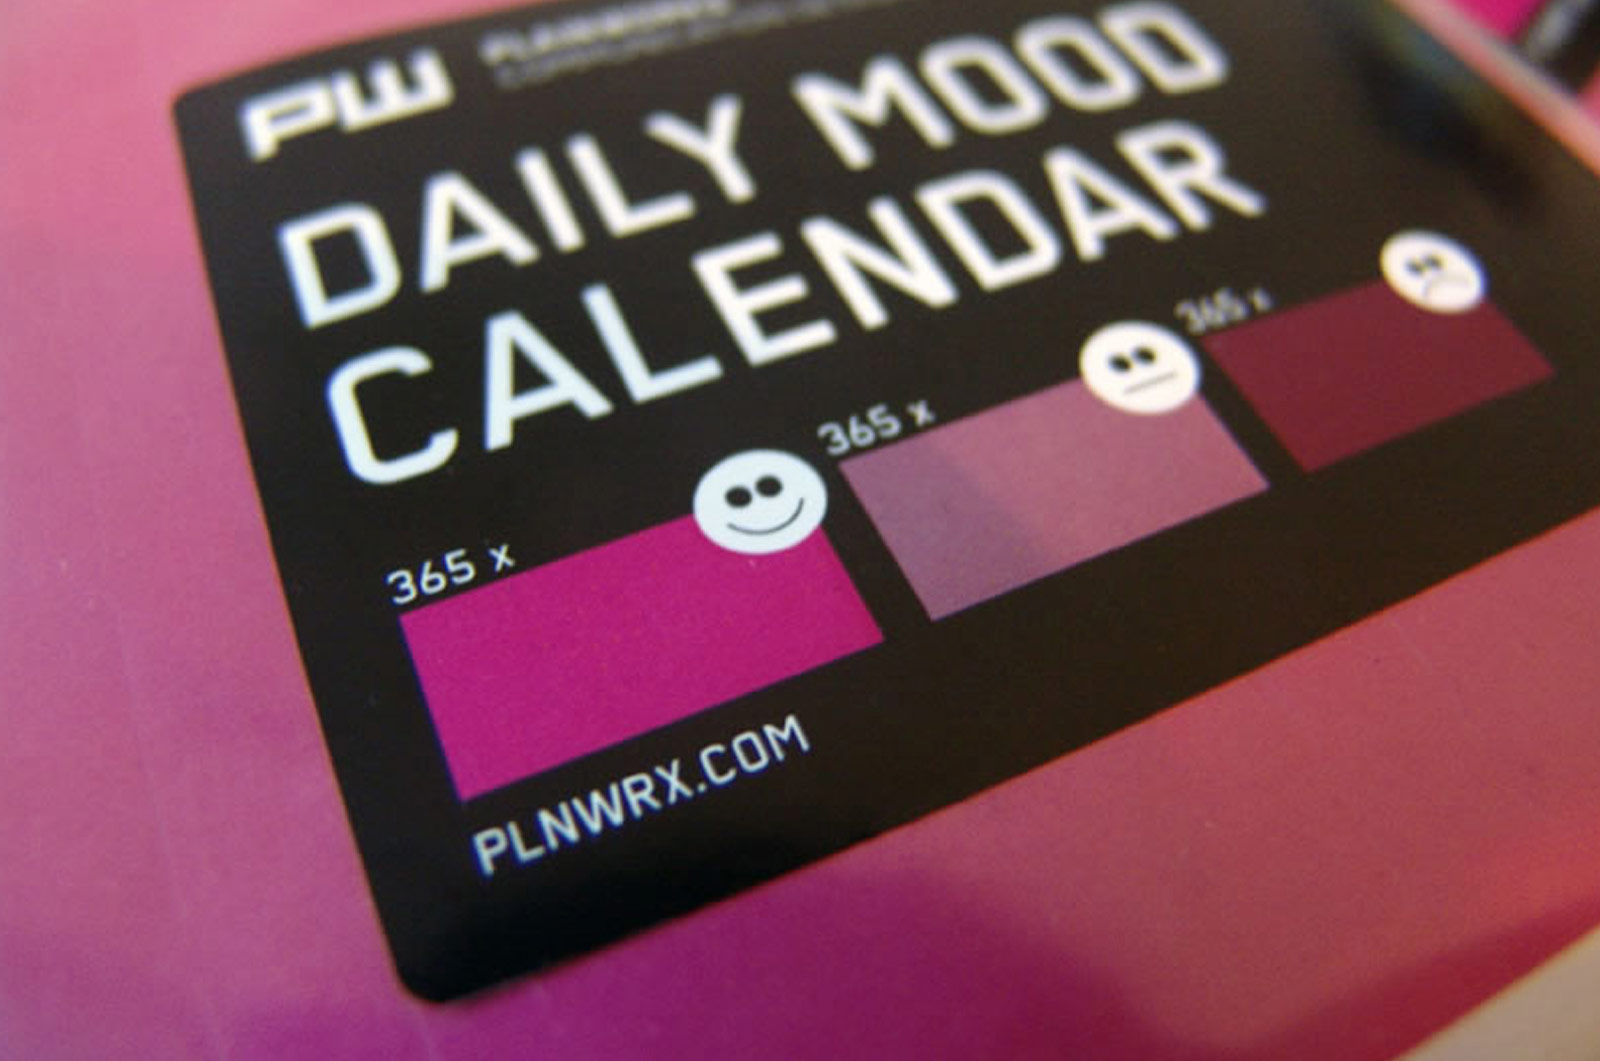 Alexander Glante - Works - Daily Mood Calendar 2010